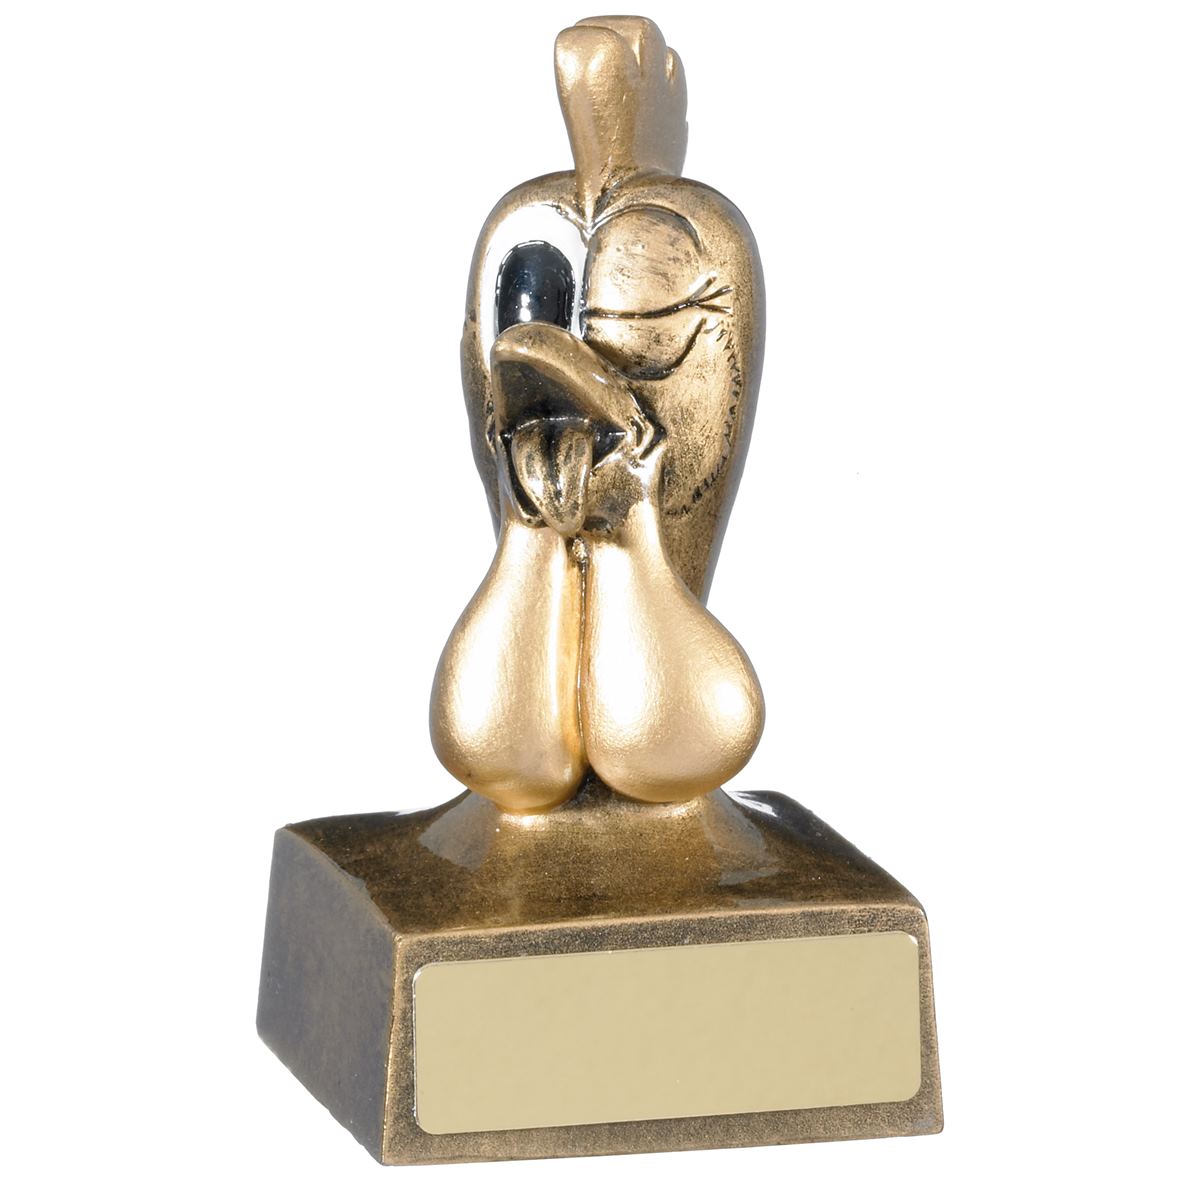 Cockerel Award Novelty Trophy